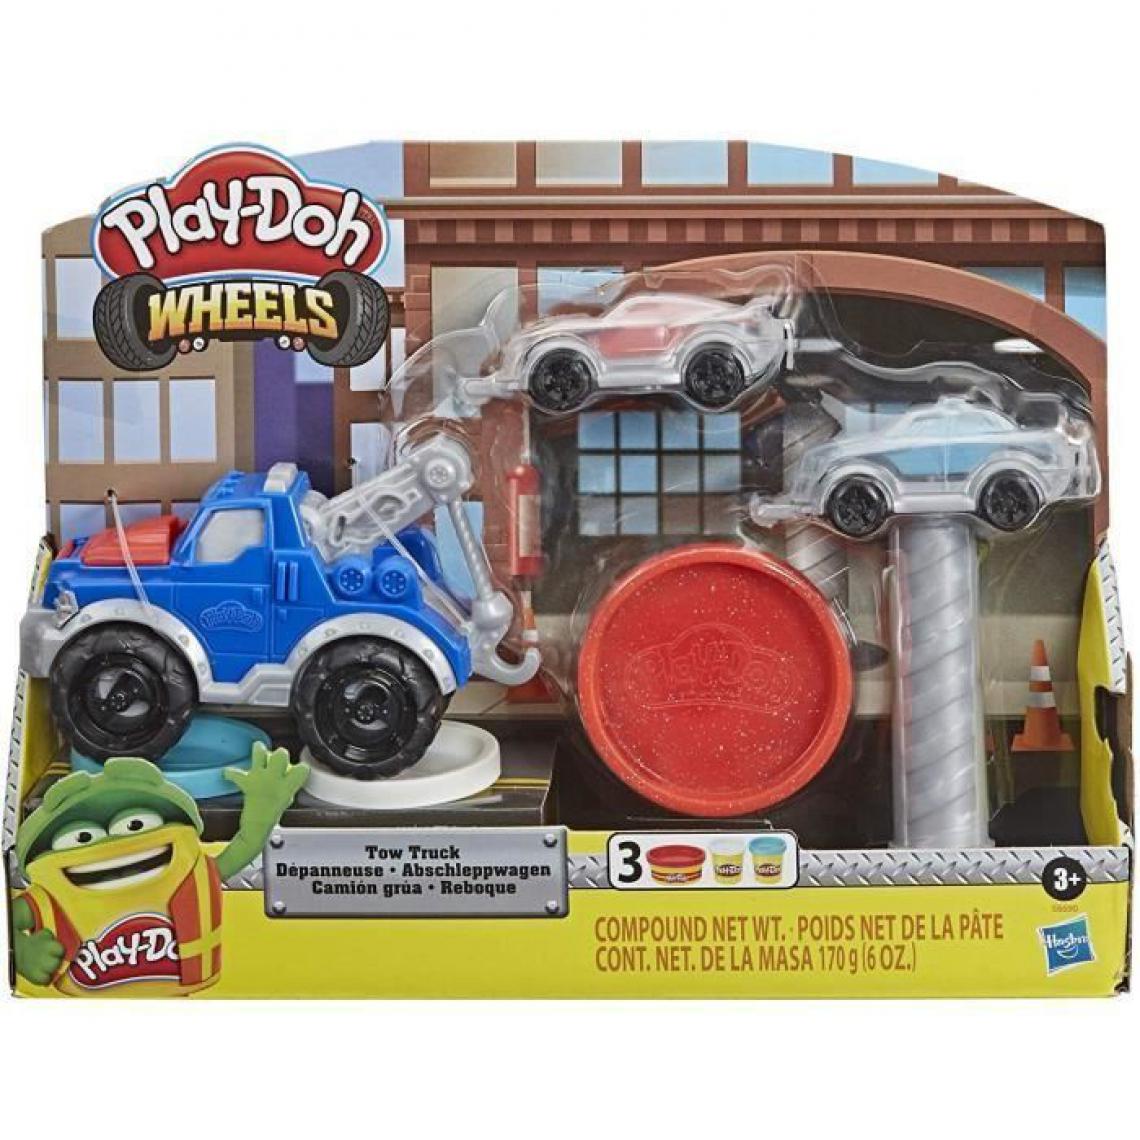 Play-Doh - Play-Doh Wheels - Pate A Modeler - La Depanneuse - Modelage